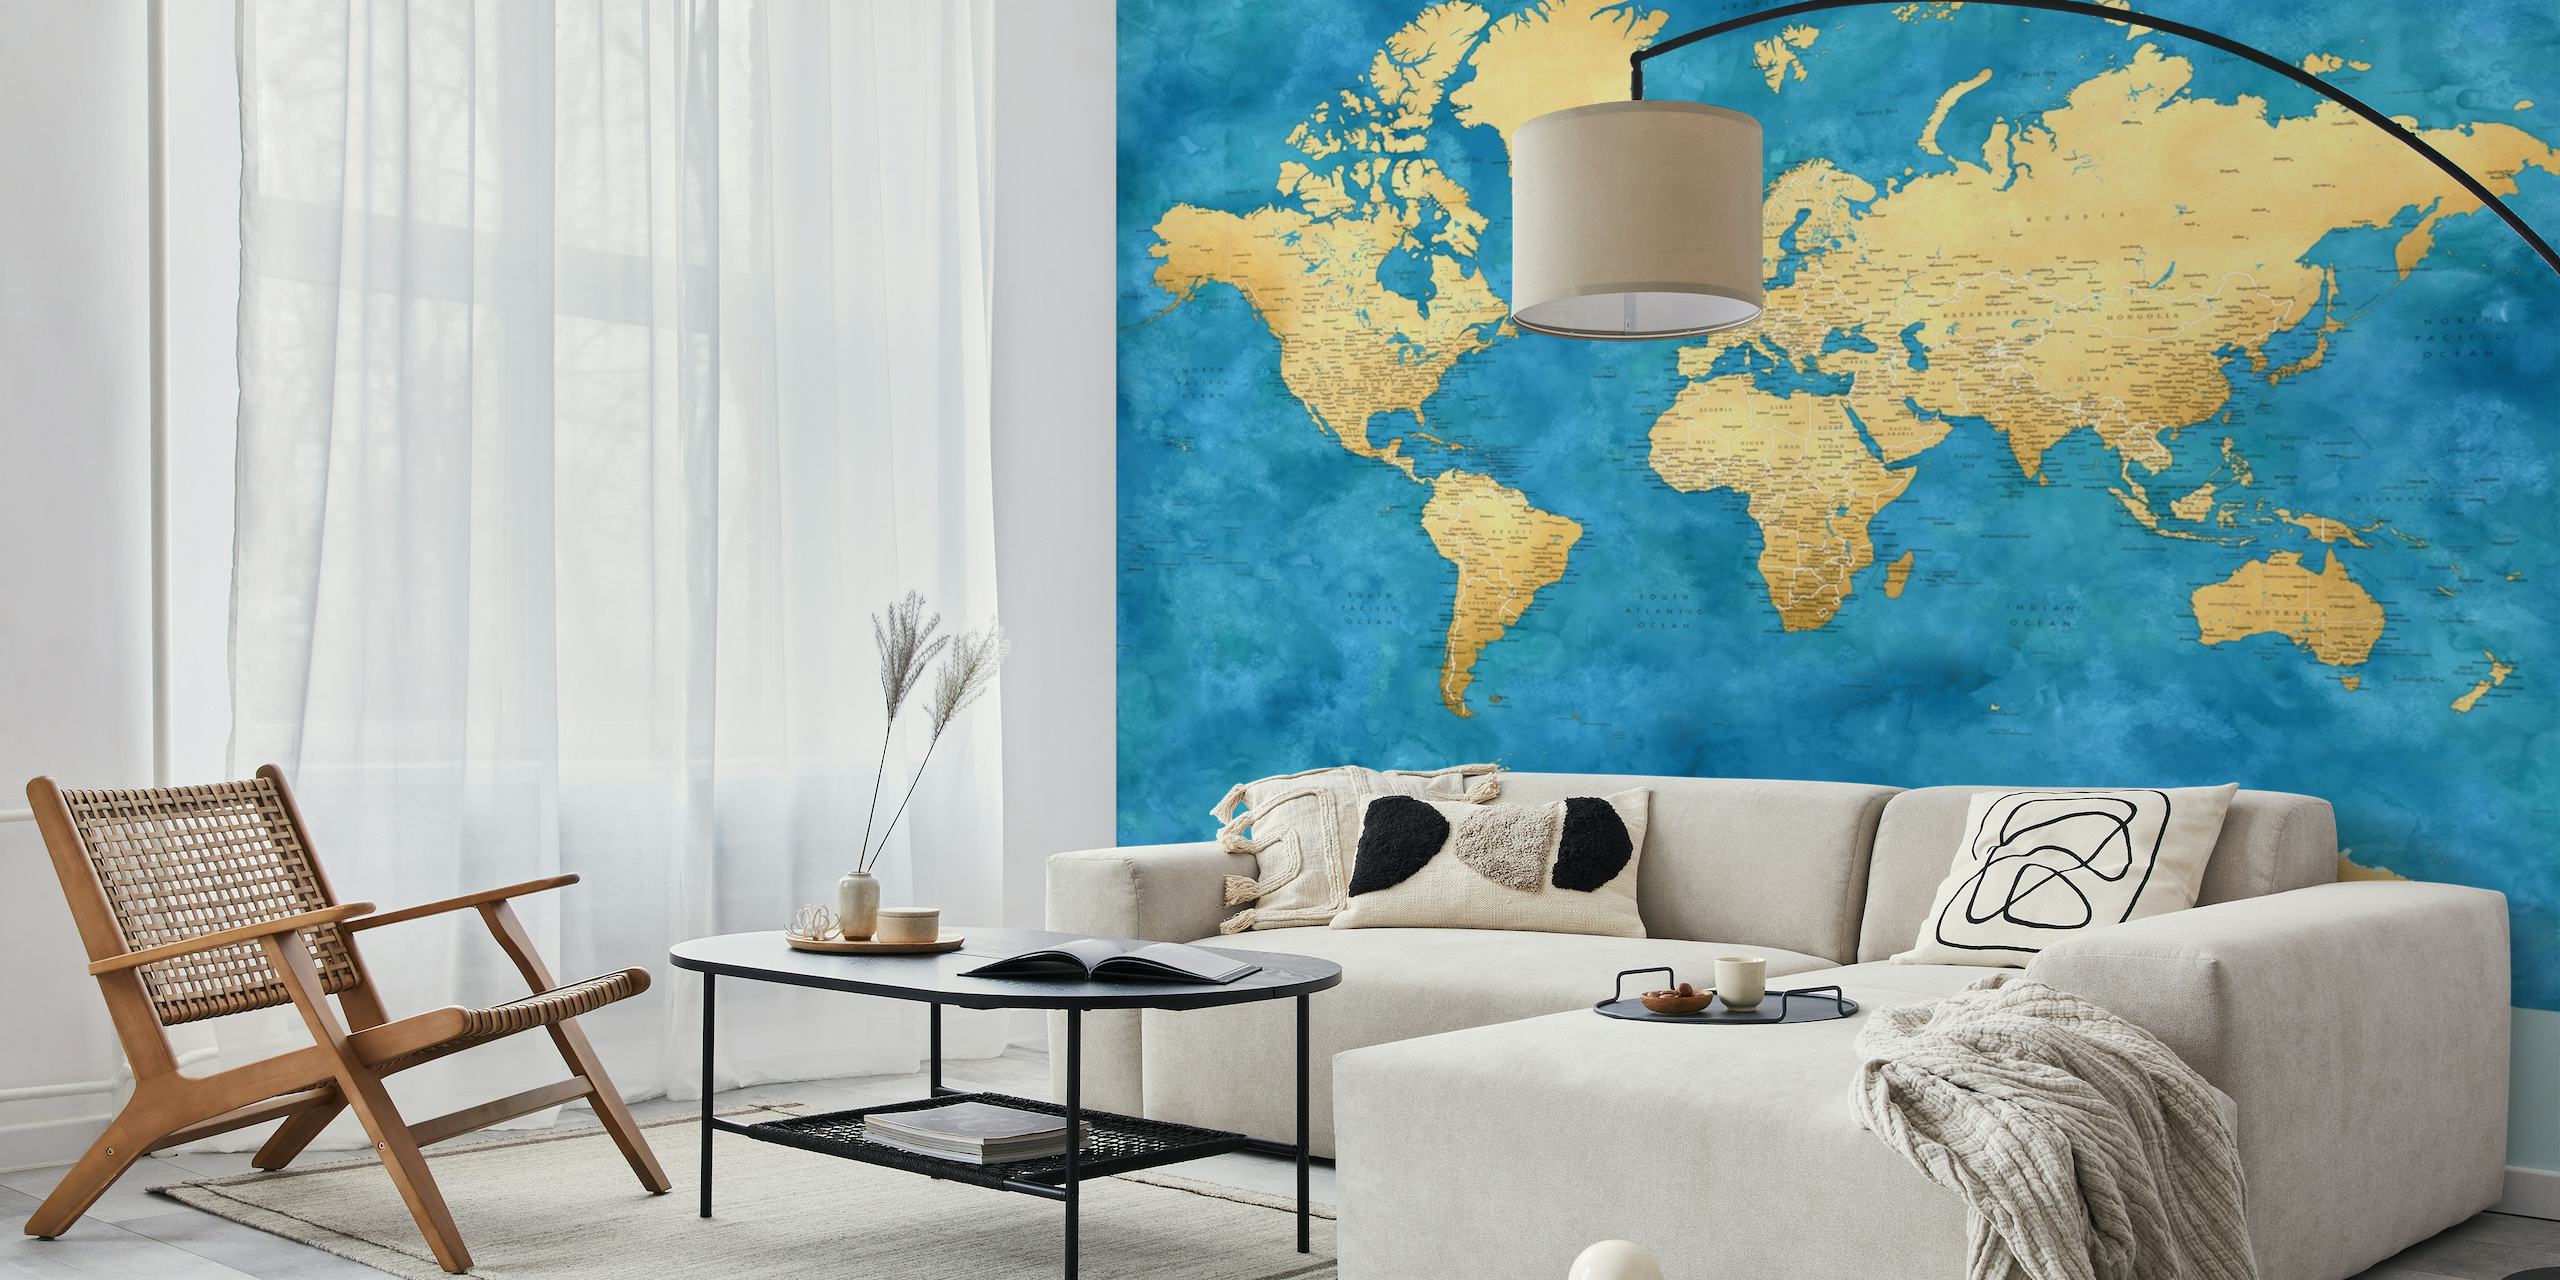 World map Ernestt Antarctica papel pintado